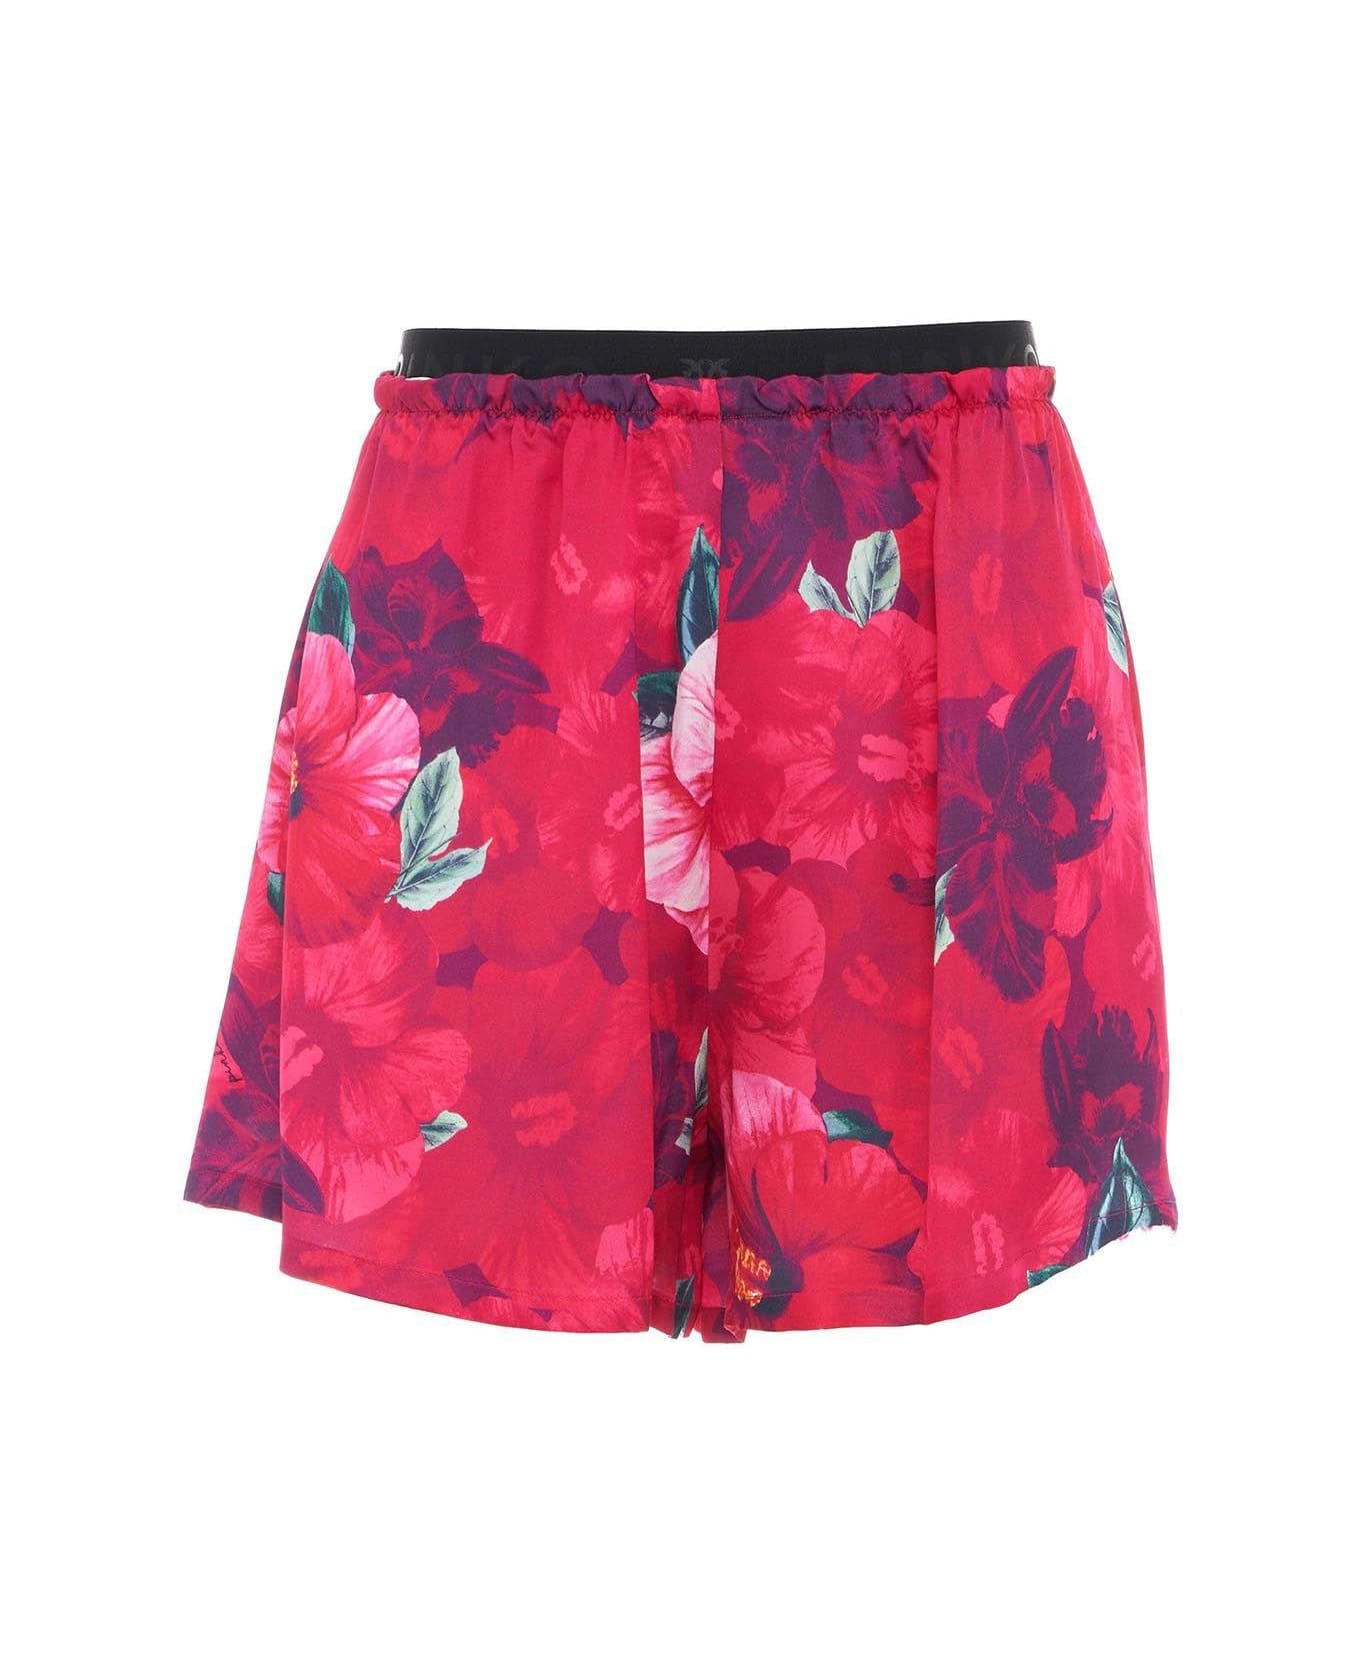 Pinko Flowing Hibiscus Printed Shorts	Cus - Multicolor